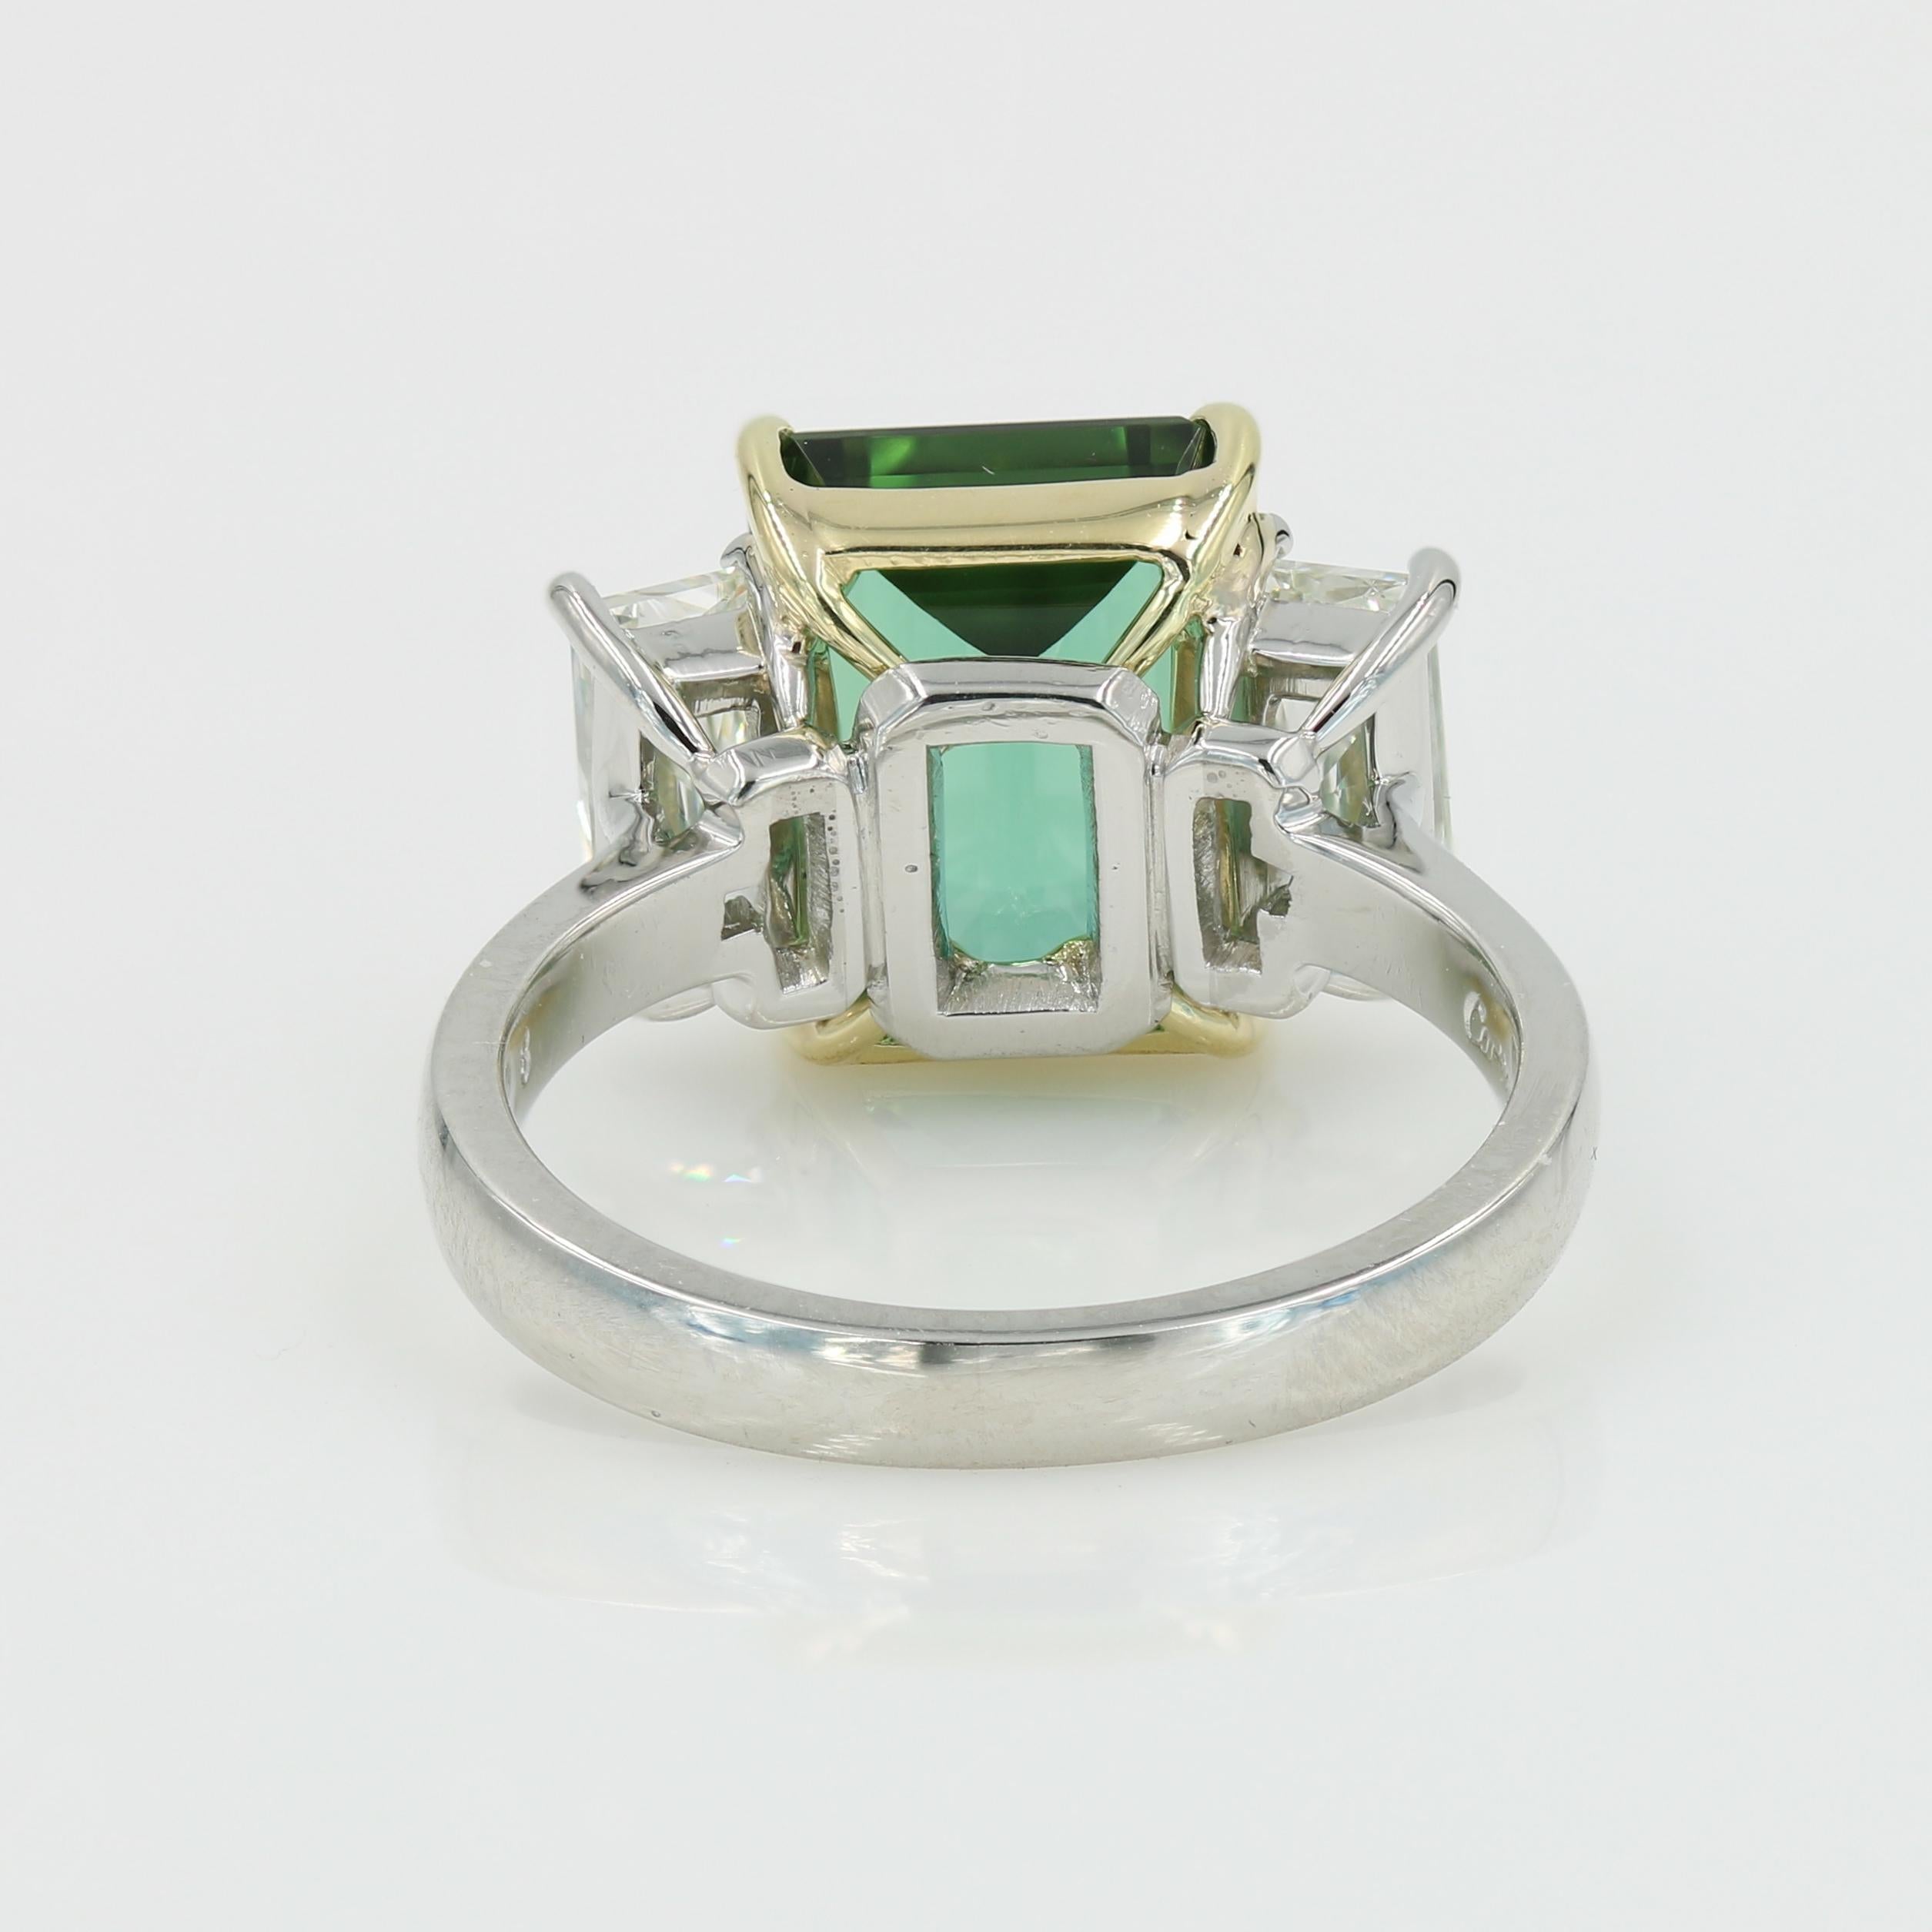 Emerald Cut Very fine green Tourmaline in a Platinum & 18kt YG mounting w 2 side diamonds